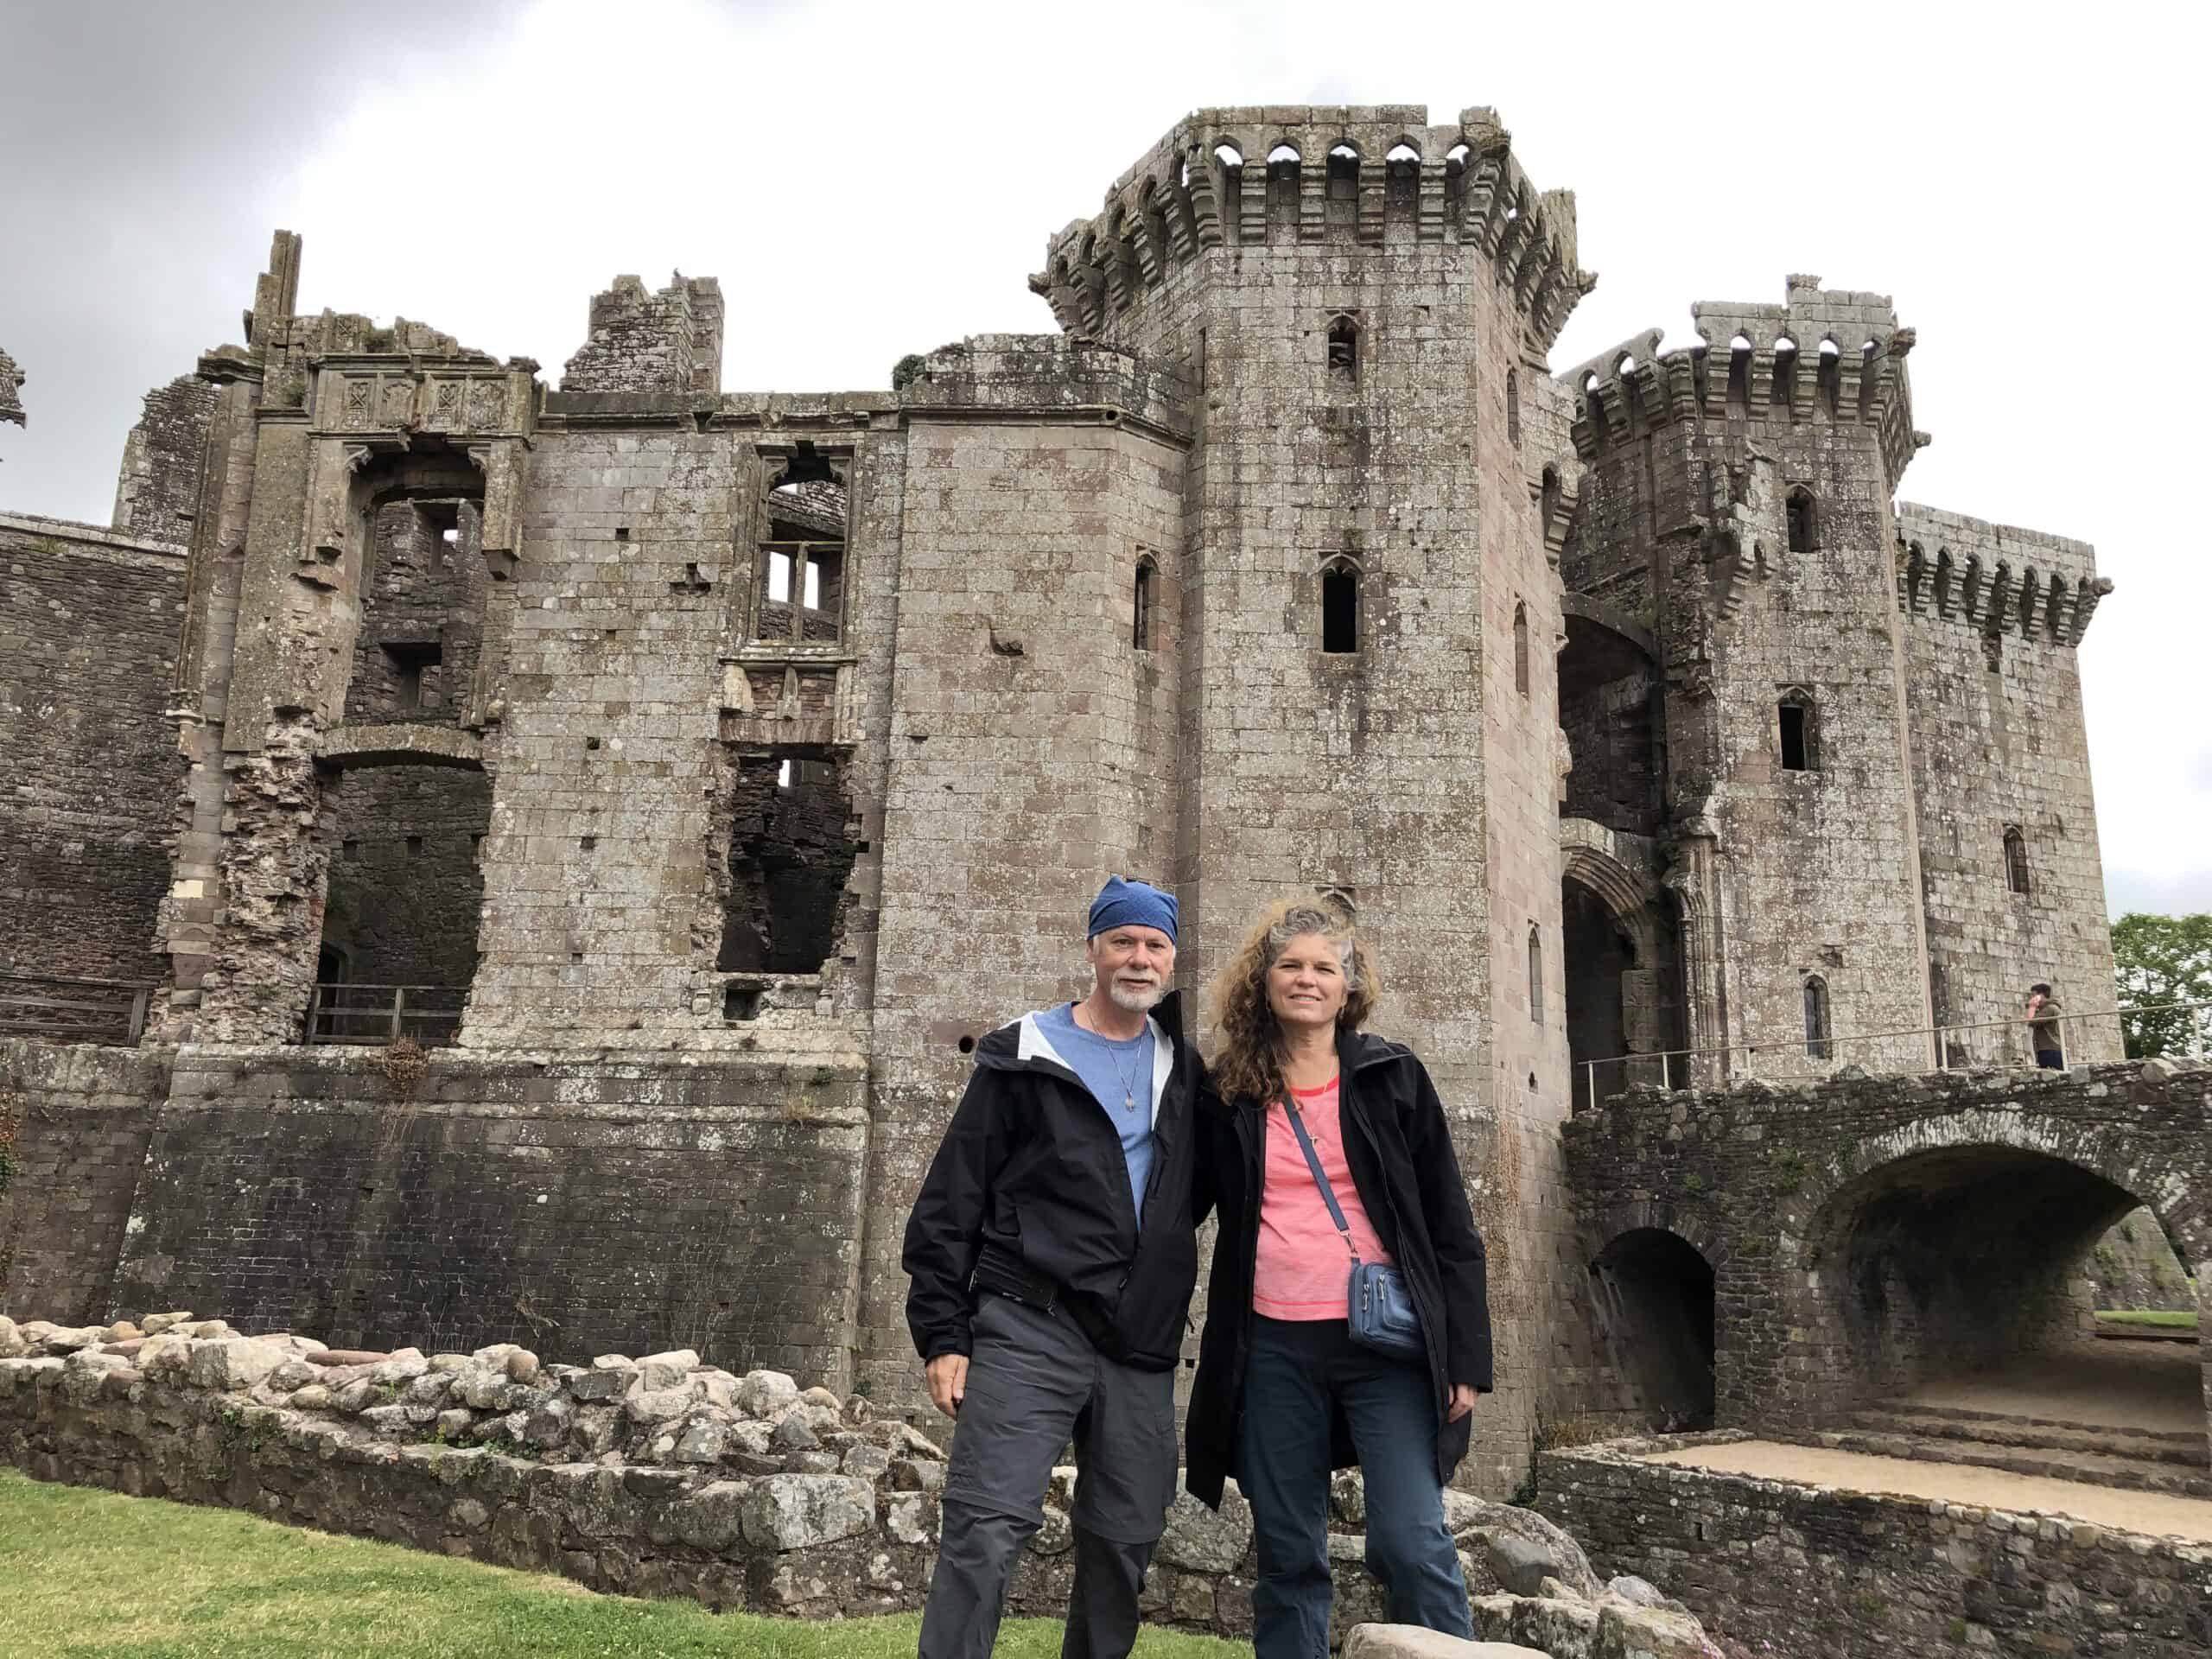 The Places Where We Go Podcast visits Raglan Castle